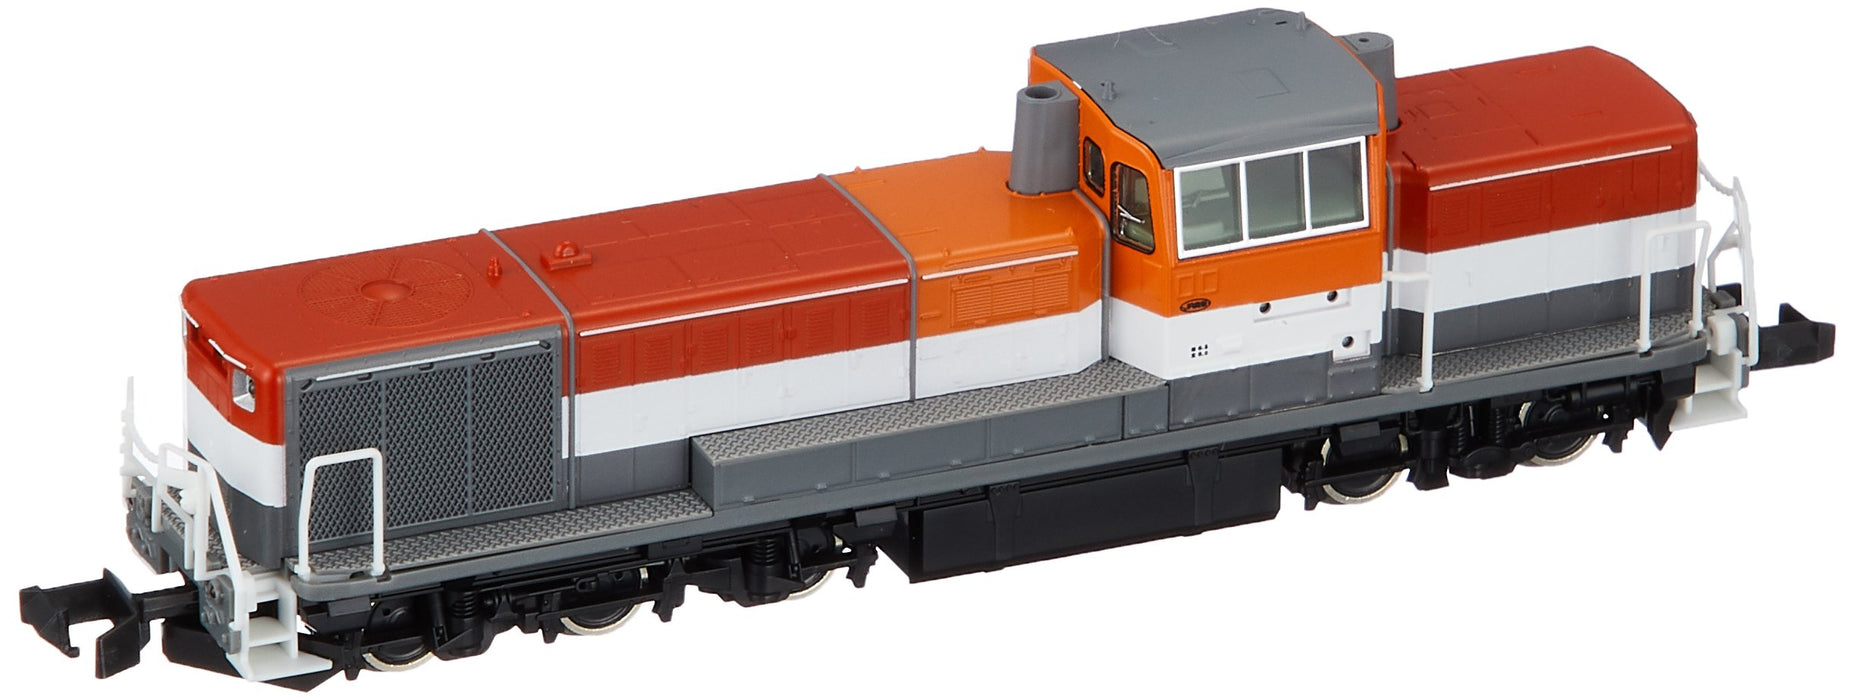 Tomytec Tomix Spur N 2232 De10 1000 Jr Cargo Spezifikation Modelleisenbahn